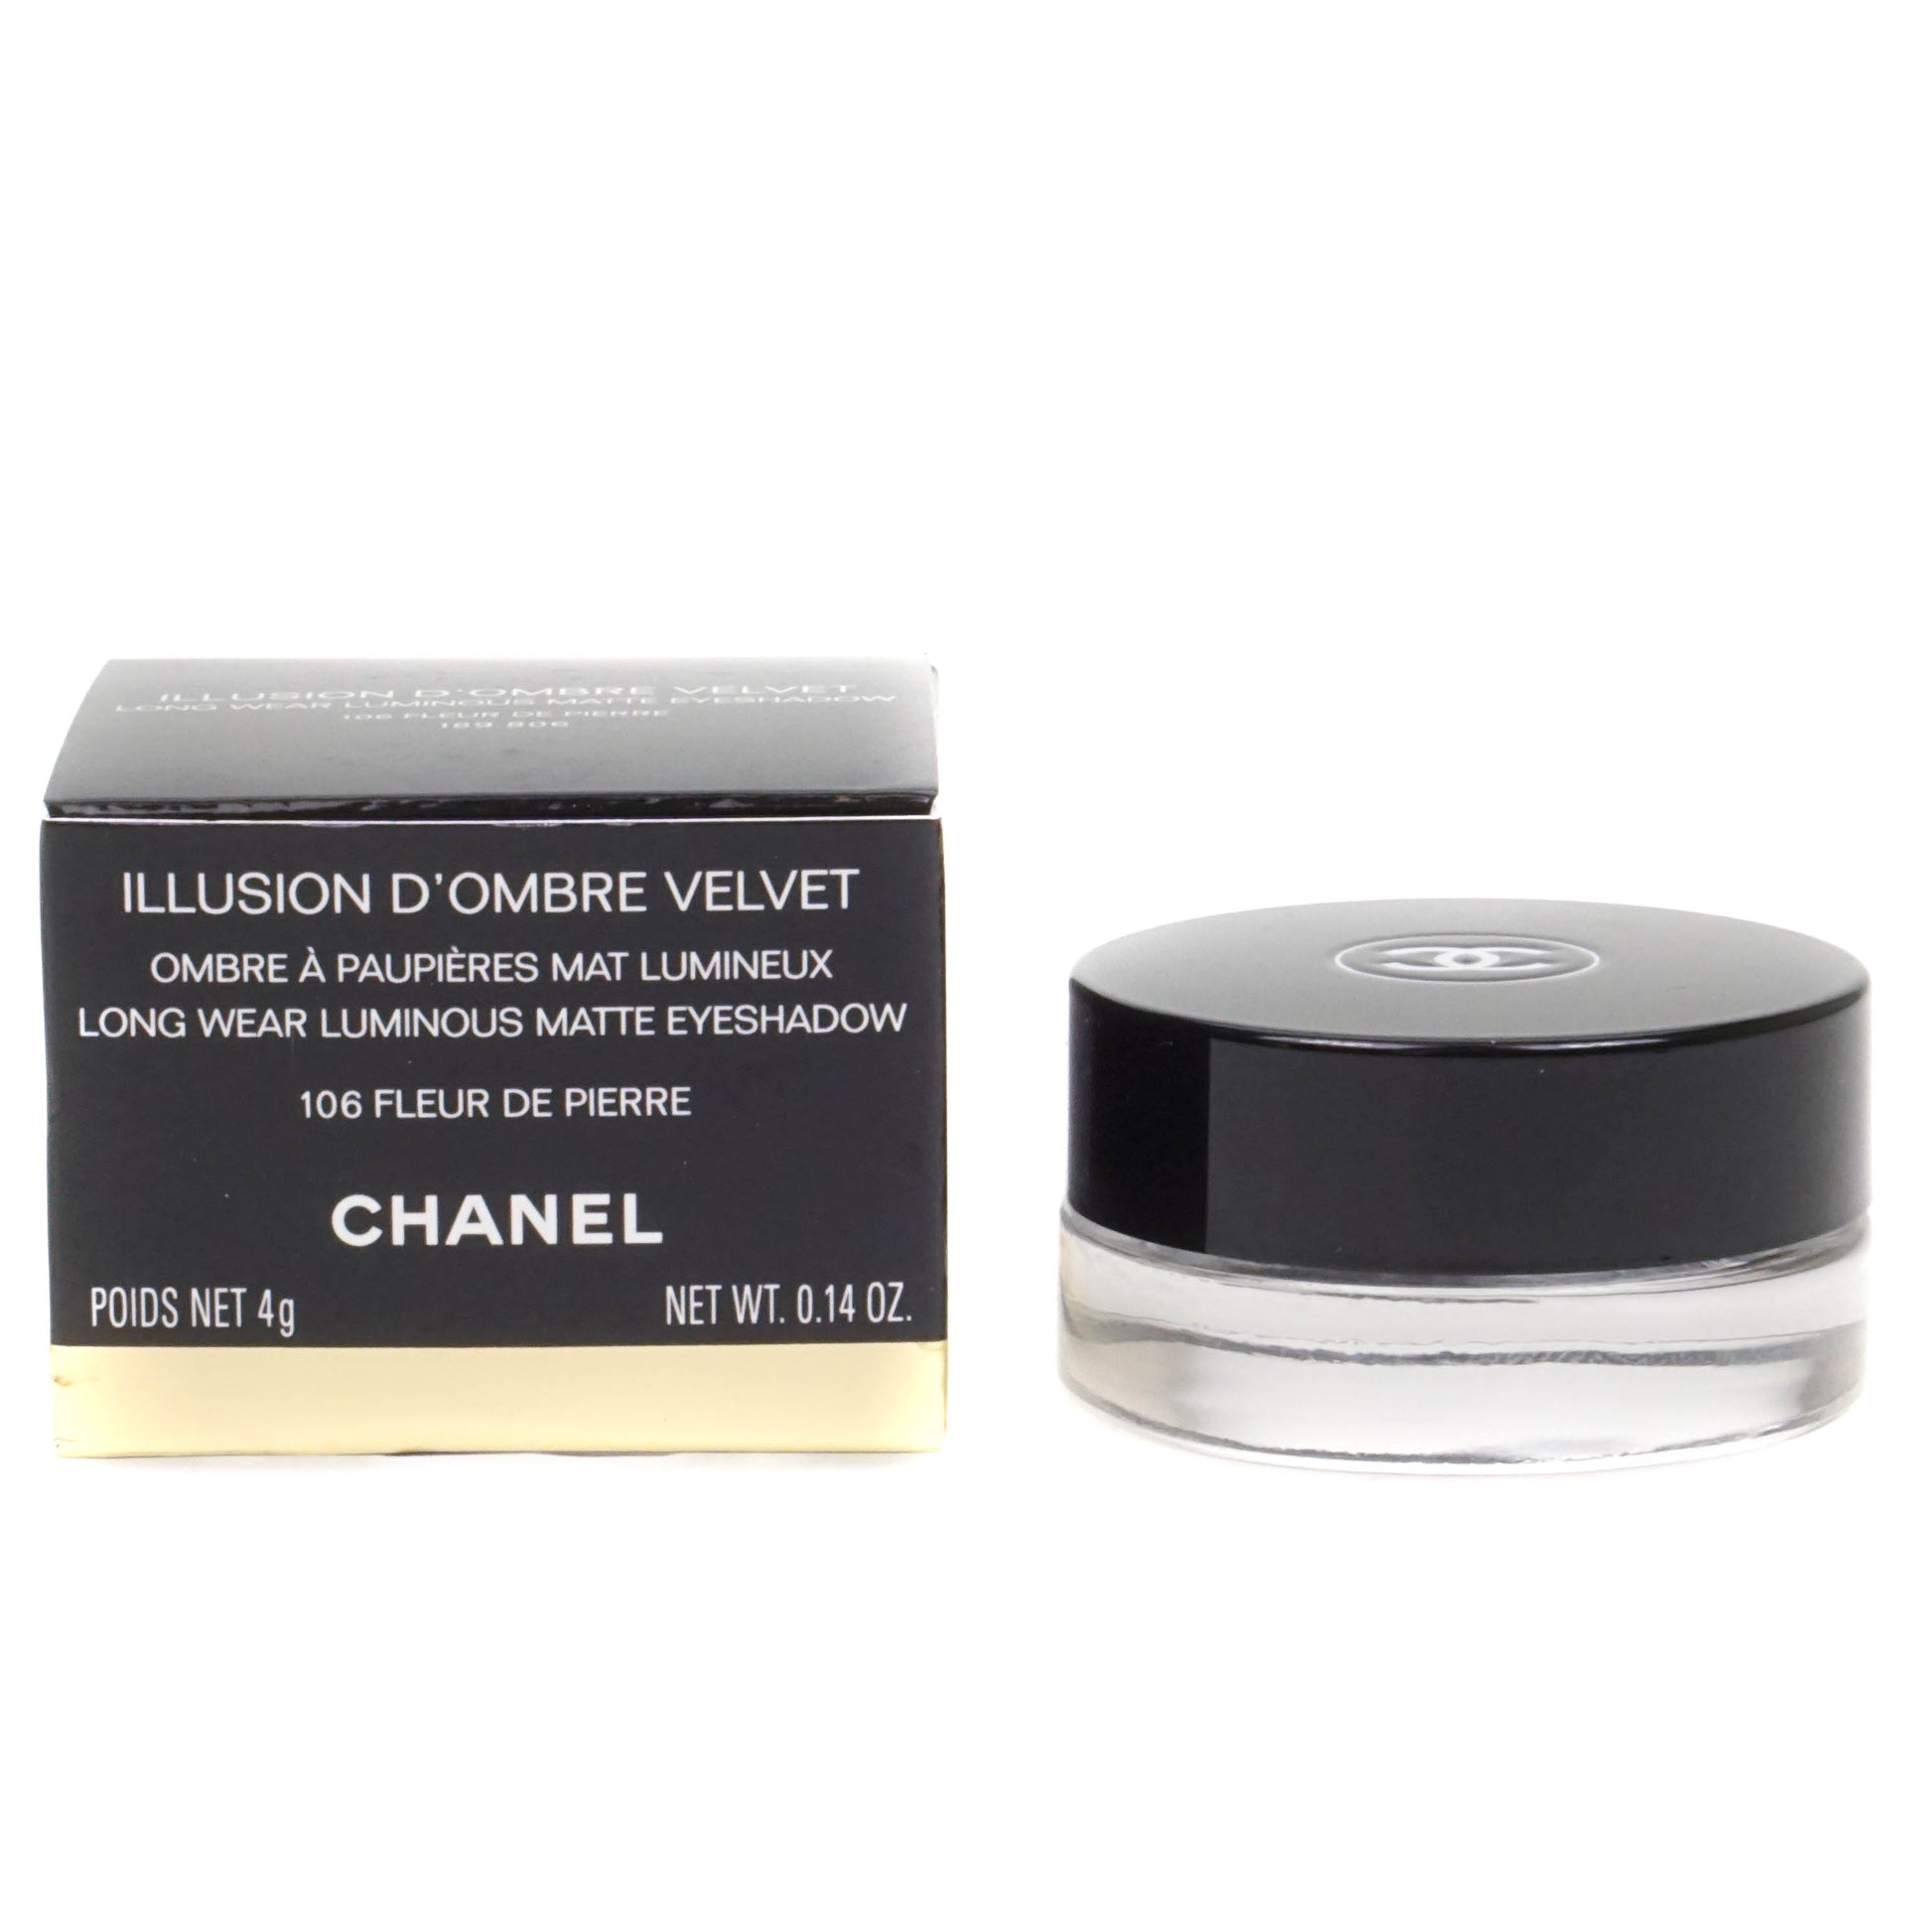 Chanel Illusion D'Ombre Velvet Long Wear Luminous Matte Eyeshadow 106 Fleur De Pierre